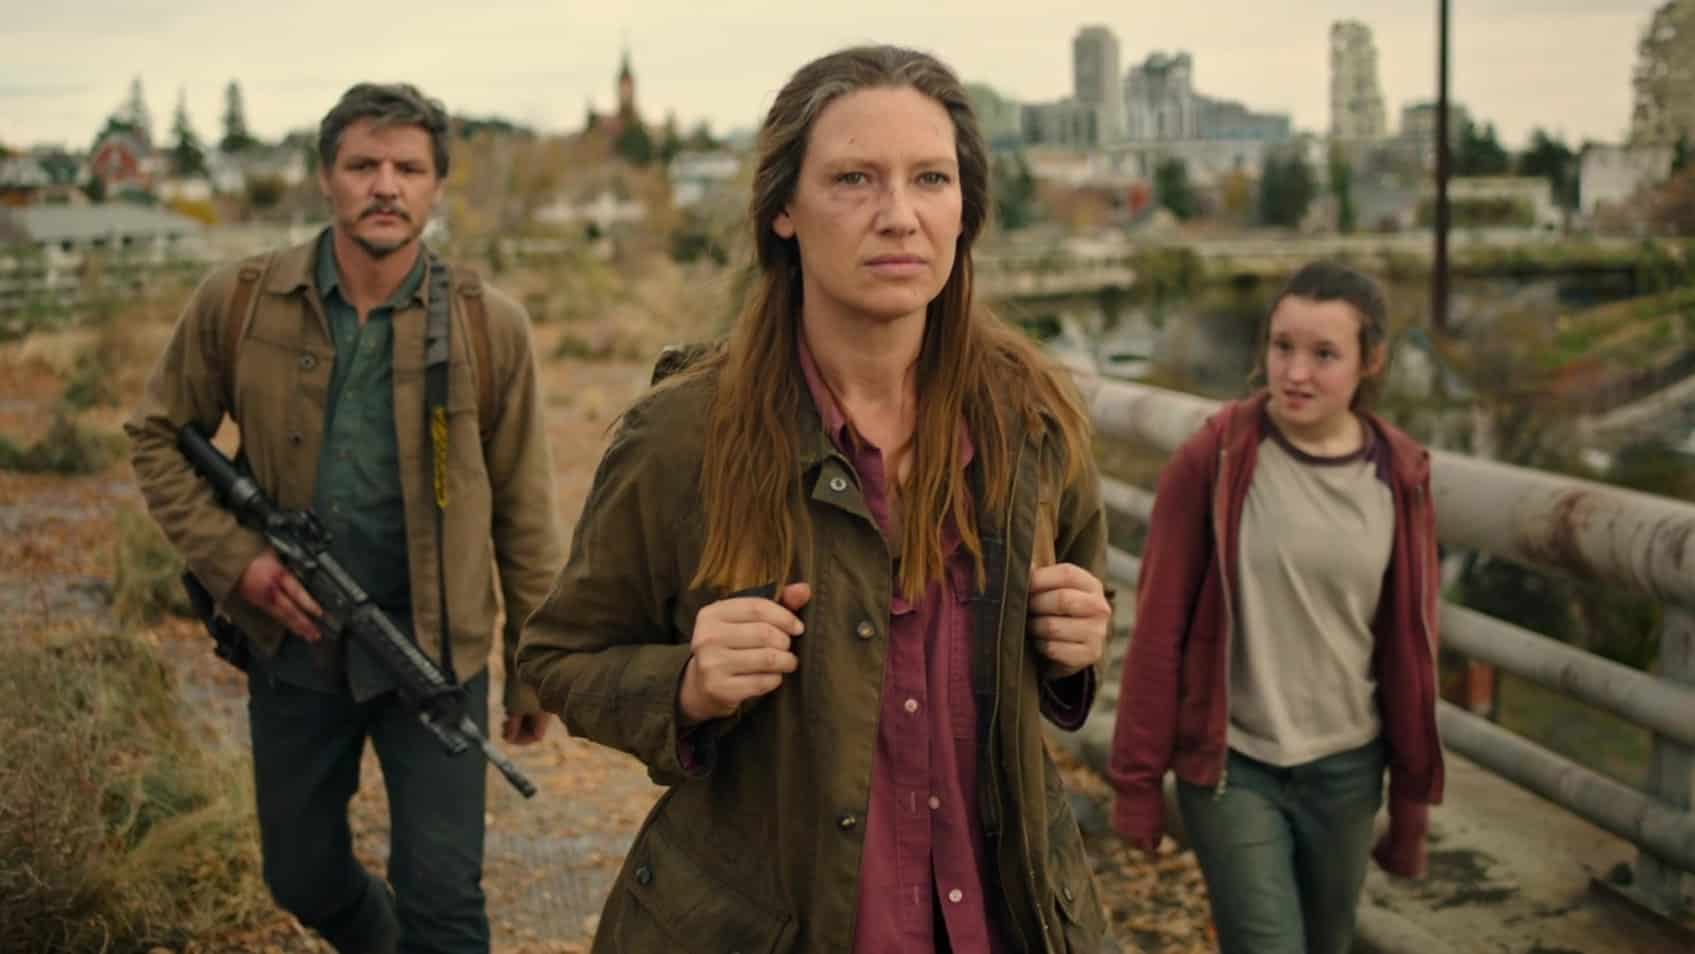 The Last of Us on Binge – Episode 3 Recap – 'Long, Long Time